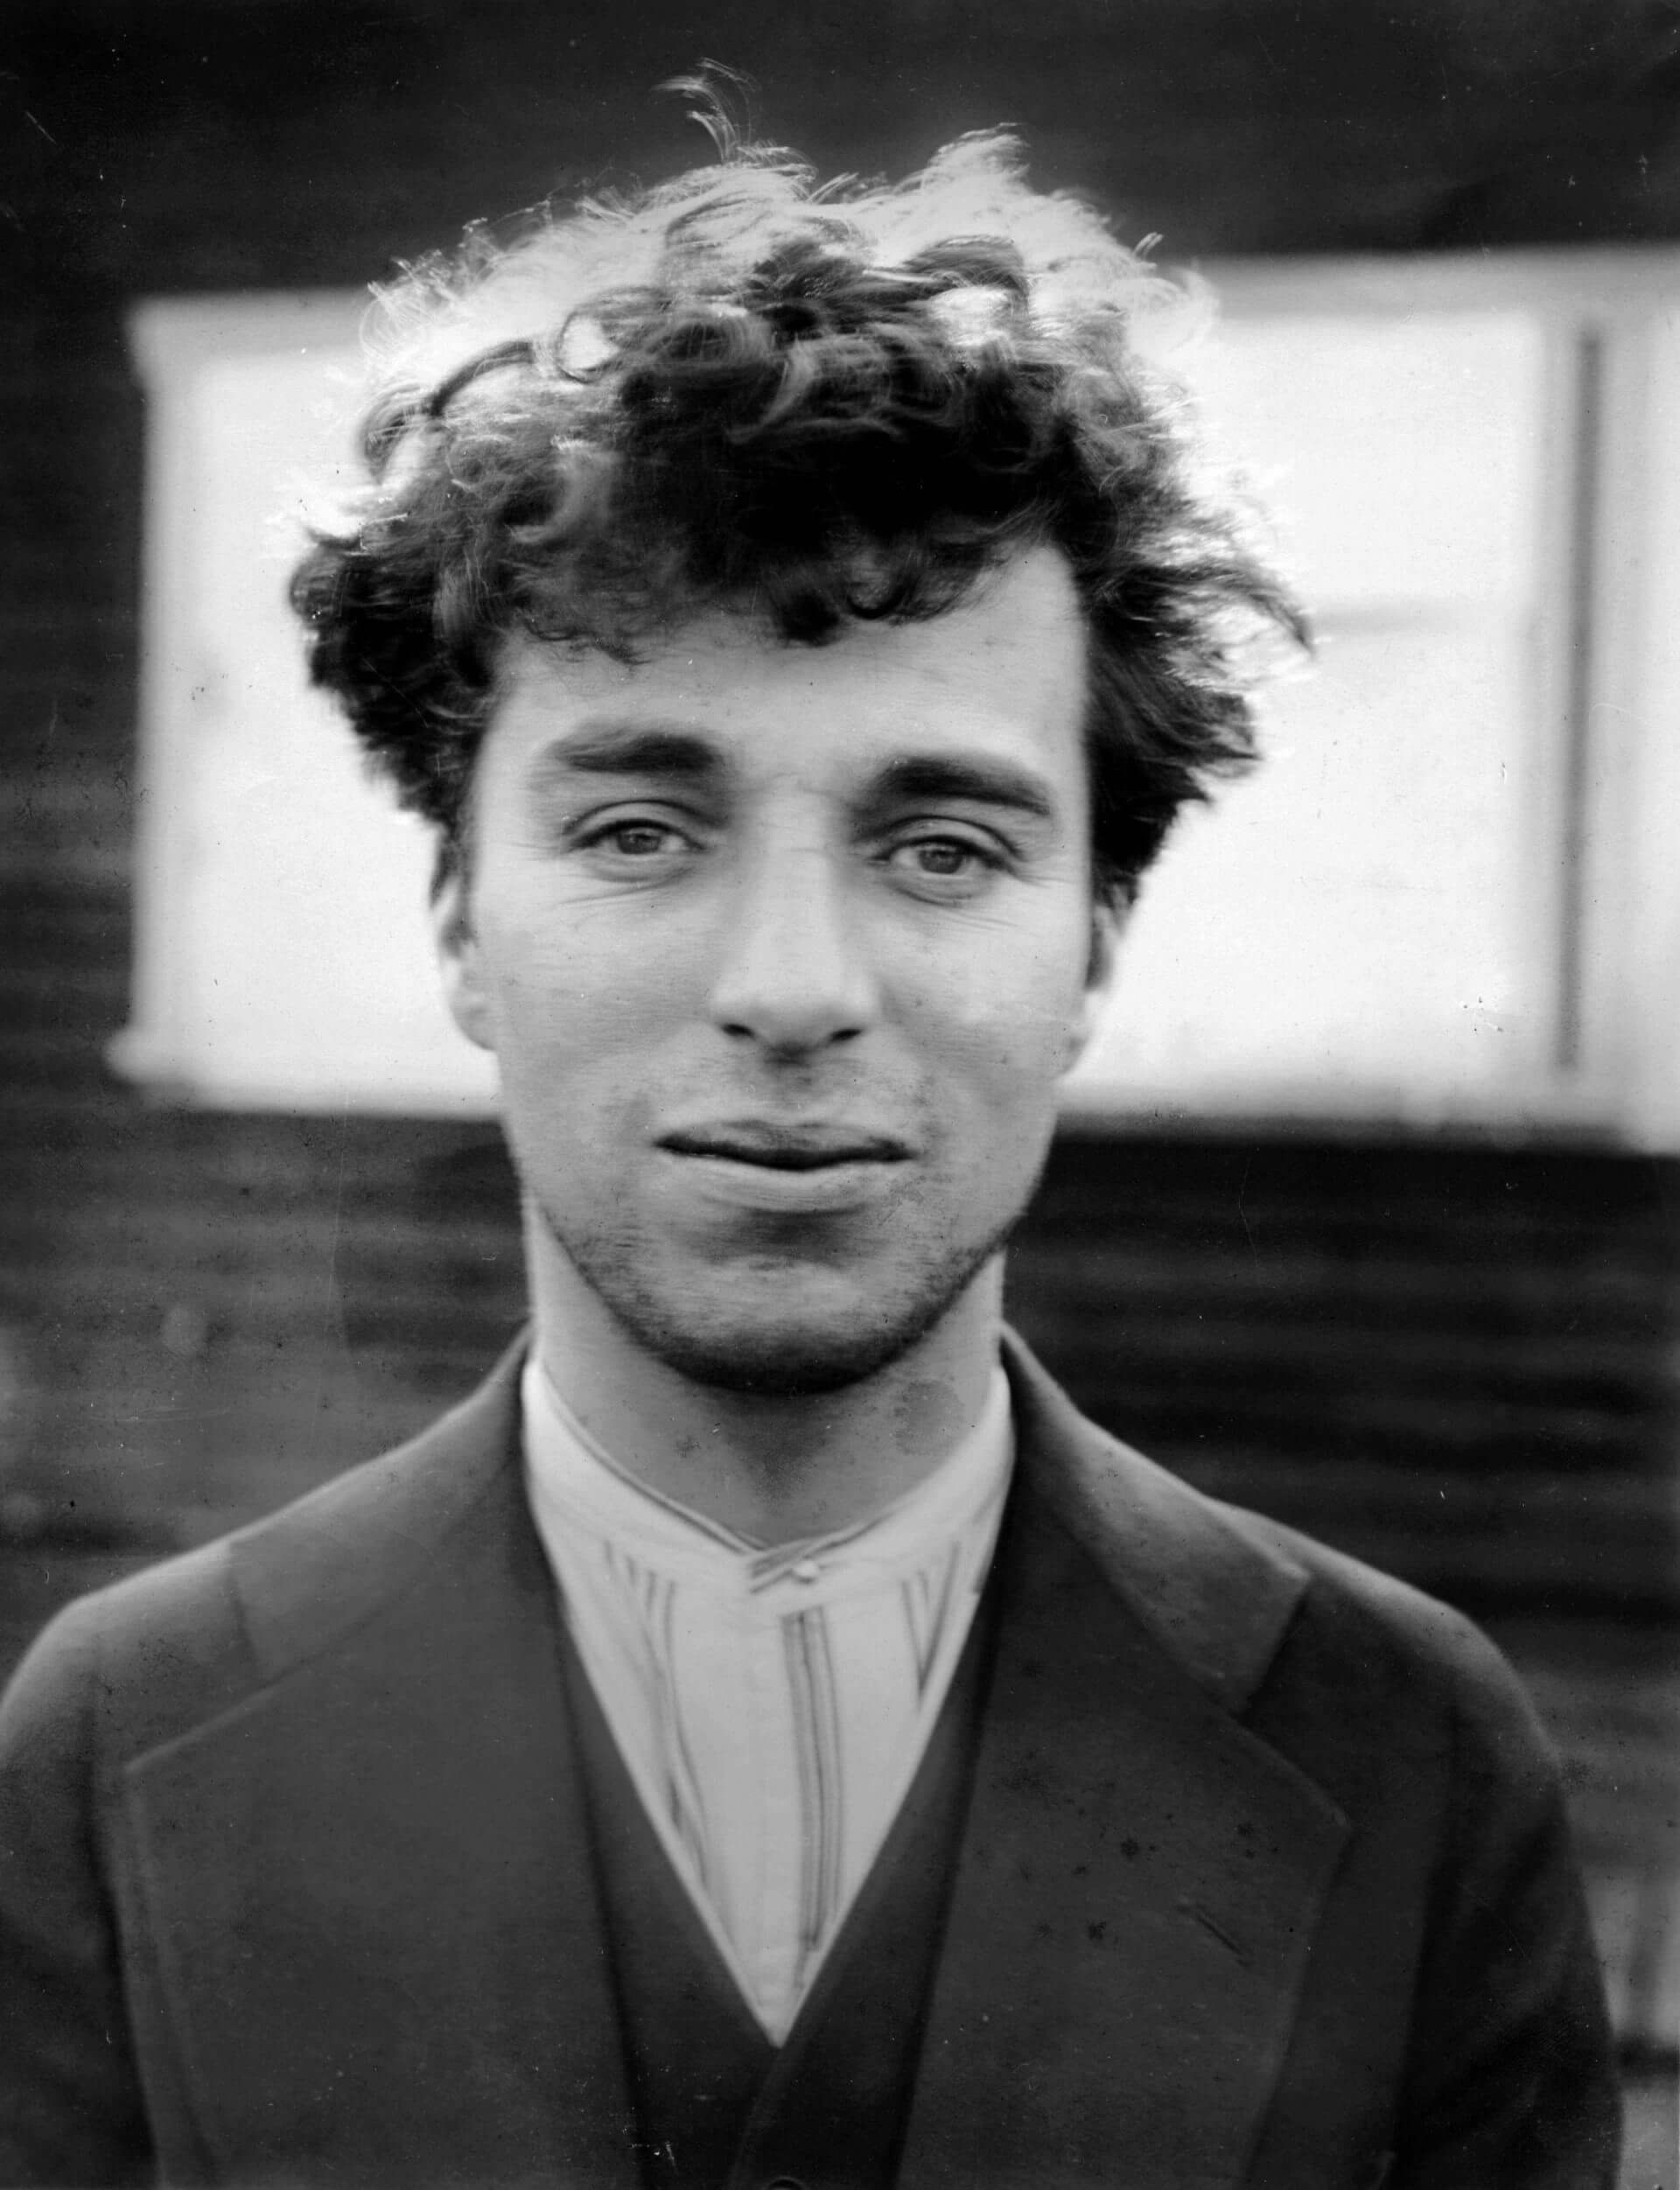 Charles Chaplin de jóven